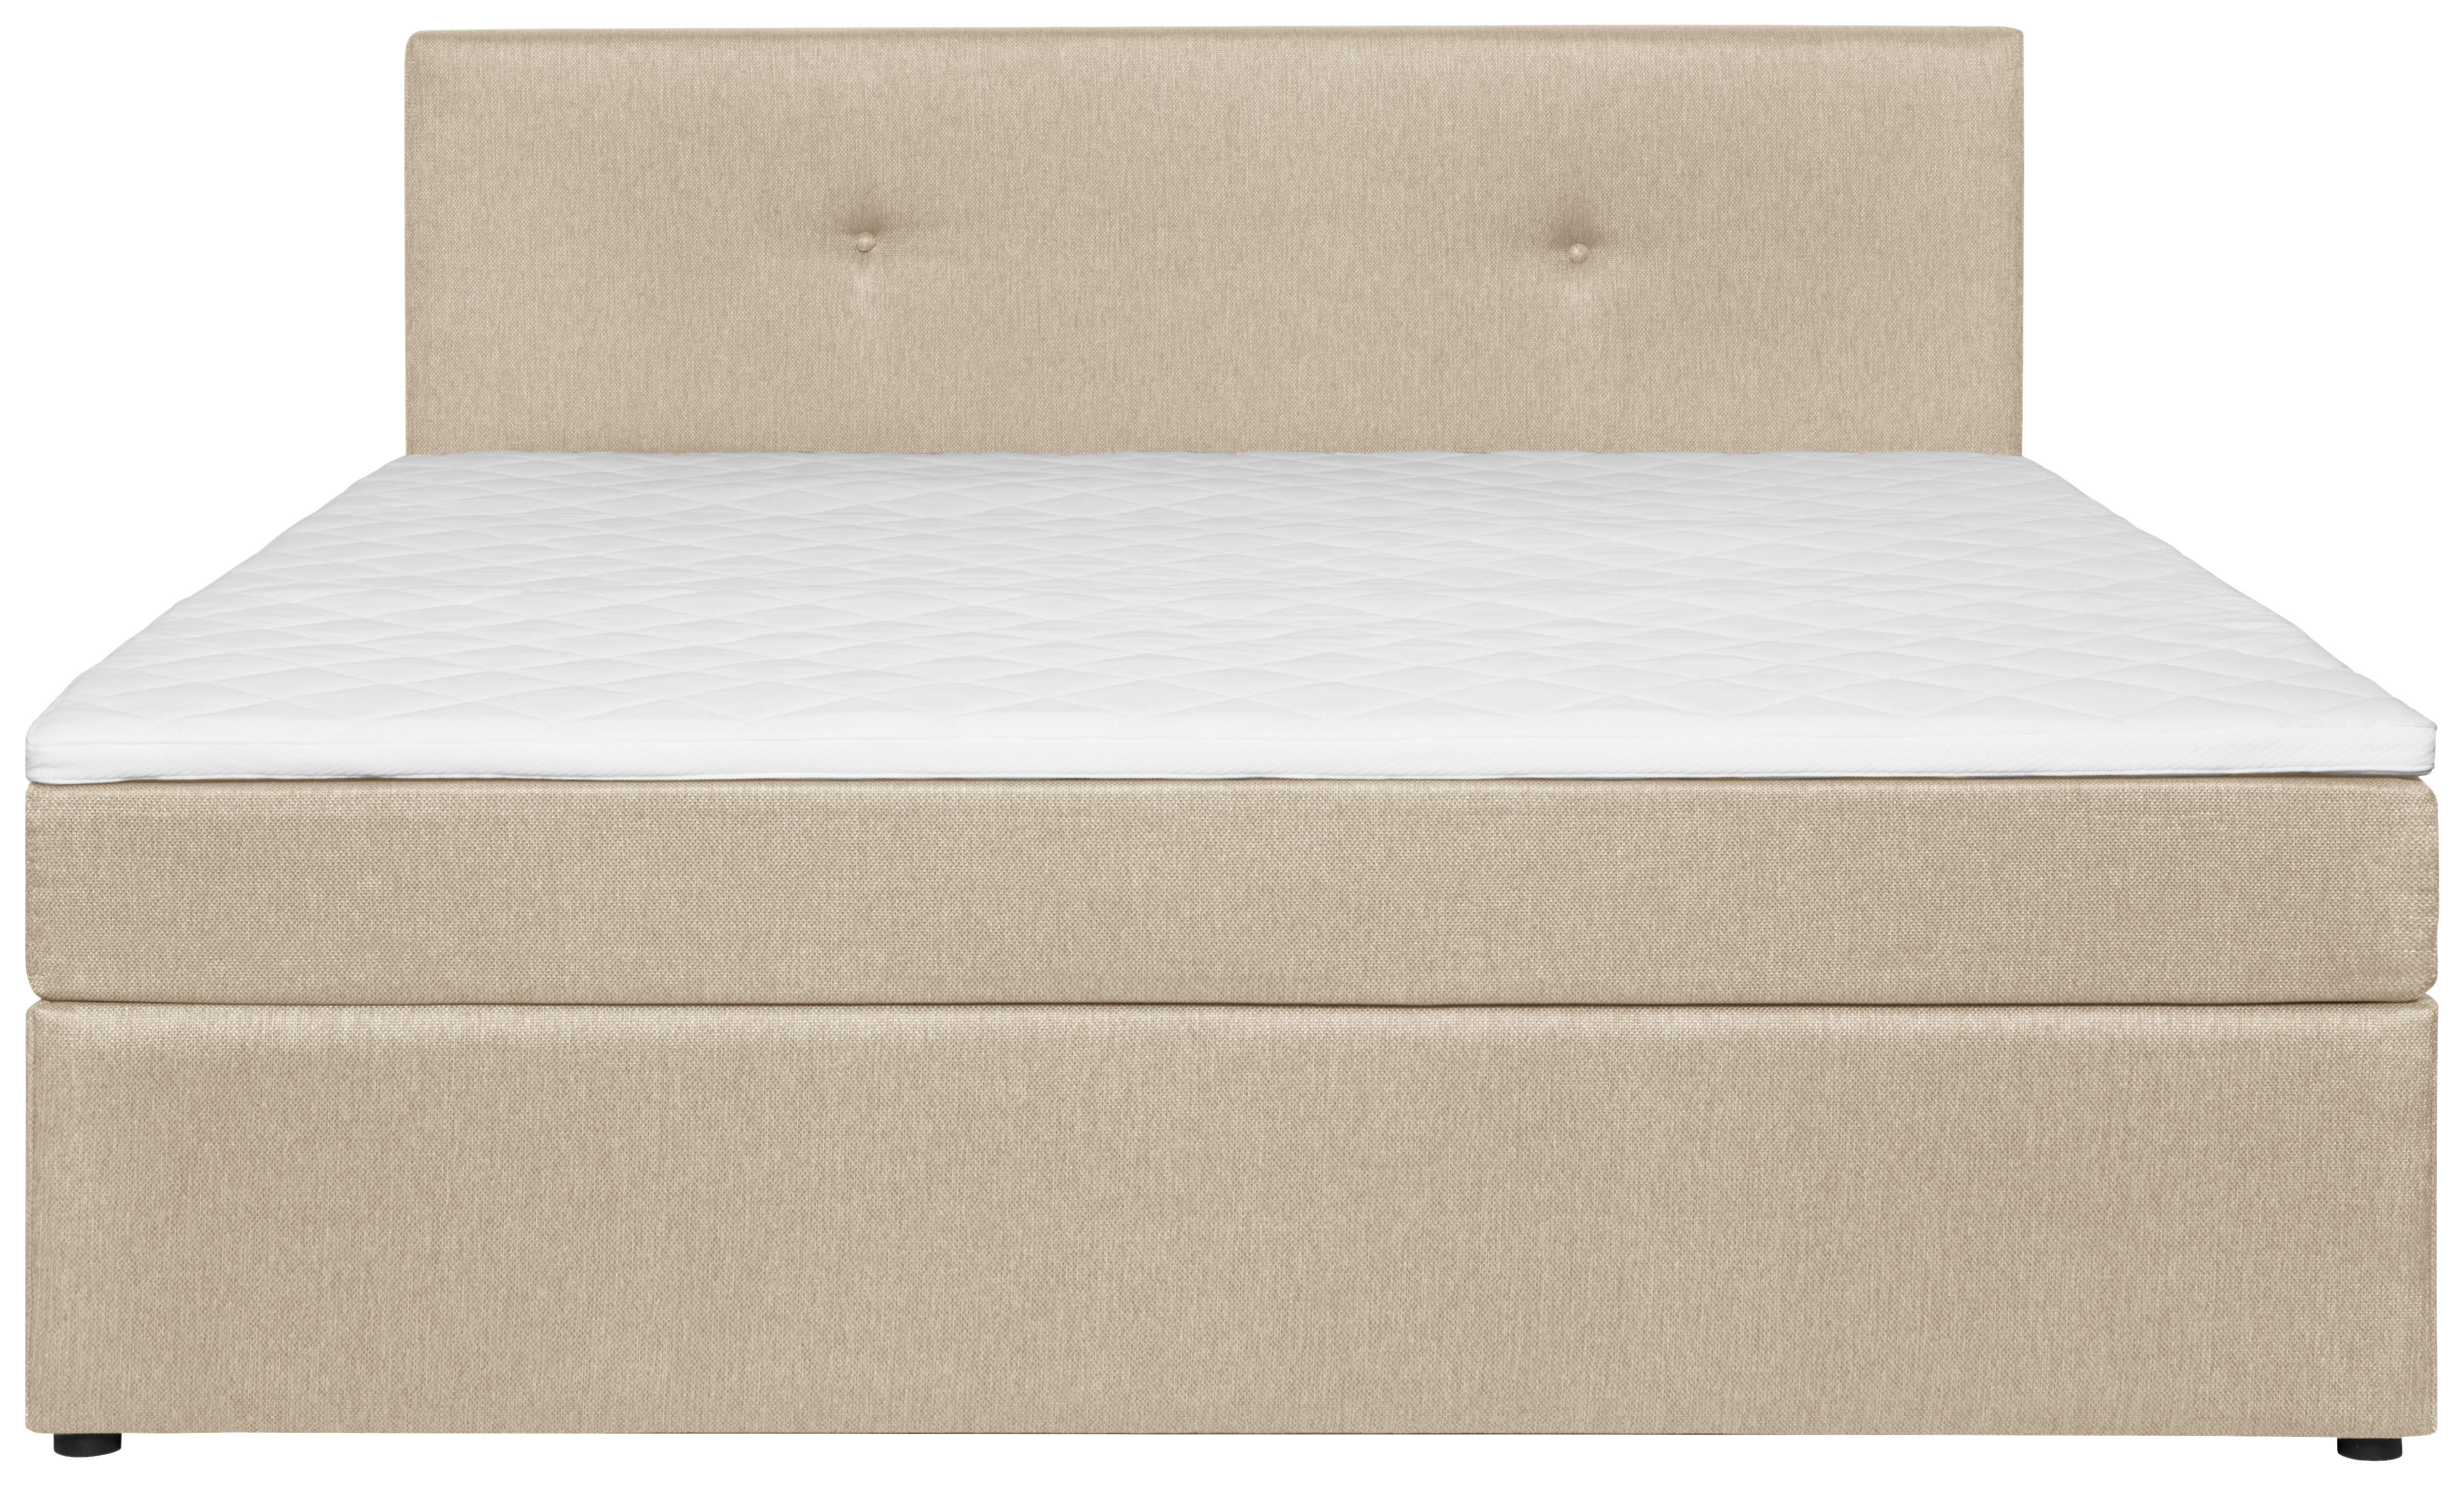 BOX KREVET    180/200 cm  - boje pijeska/crna, Konvencionalno, drvo/tekstil (180/200cm) - P & B